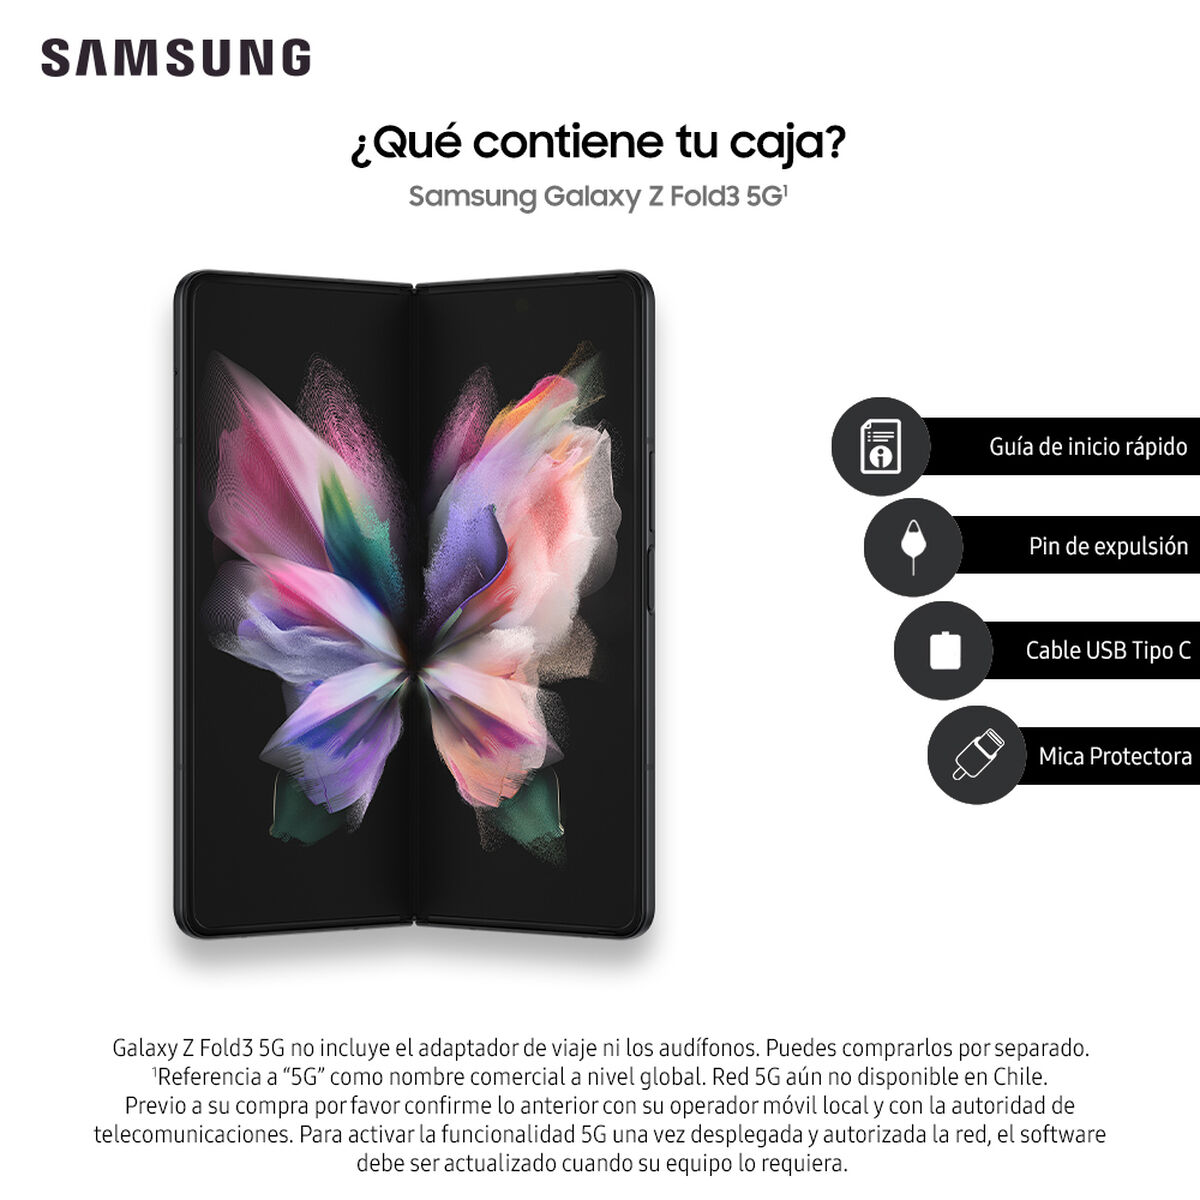 Combo Celular Samsung Galaxy Z Fold3 5G 256GB Phantom Black + LED 55" Samsung TU7090 Smart TV Crystal 4K UHD